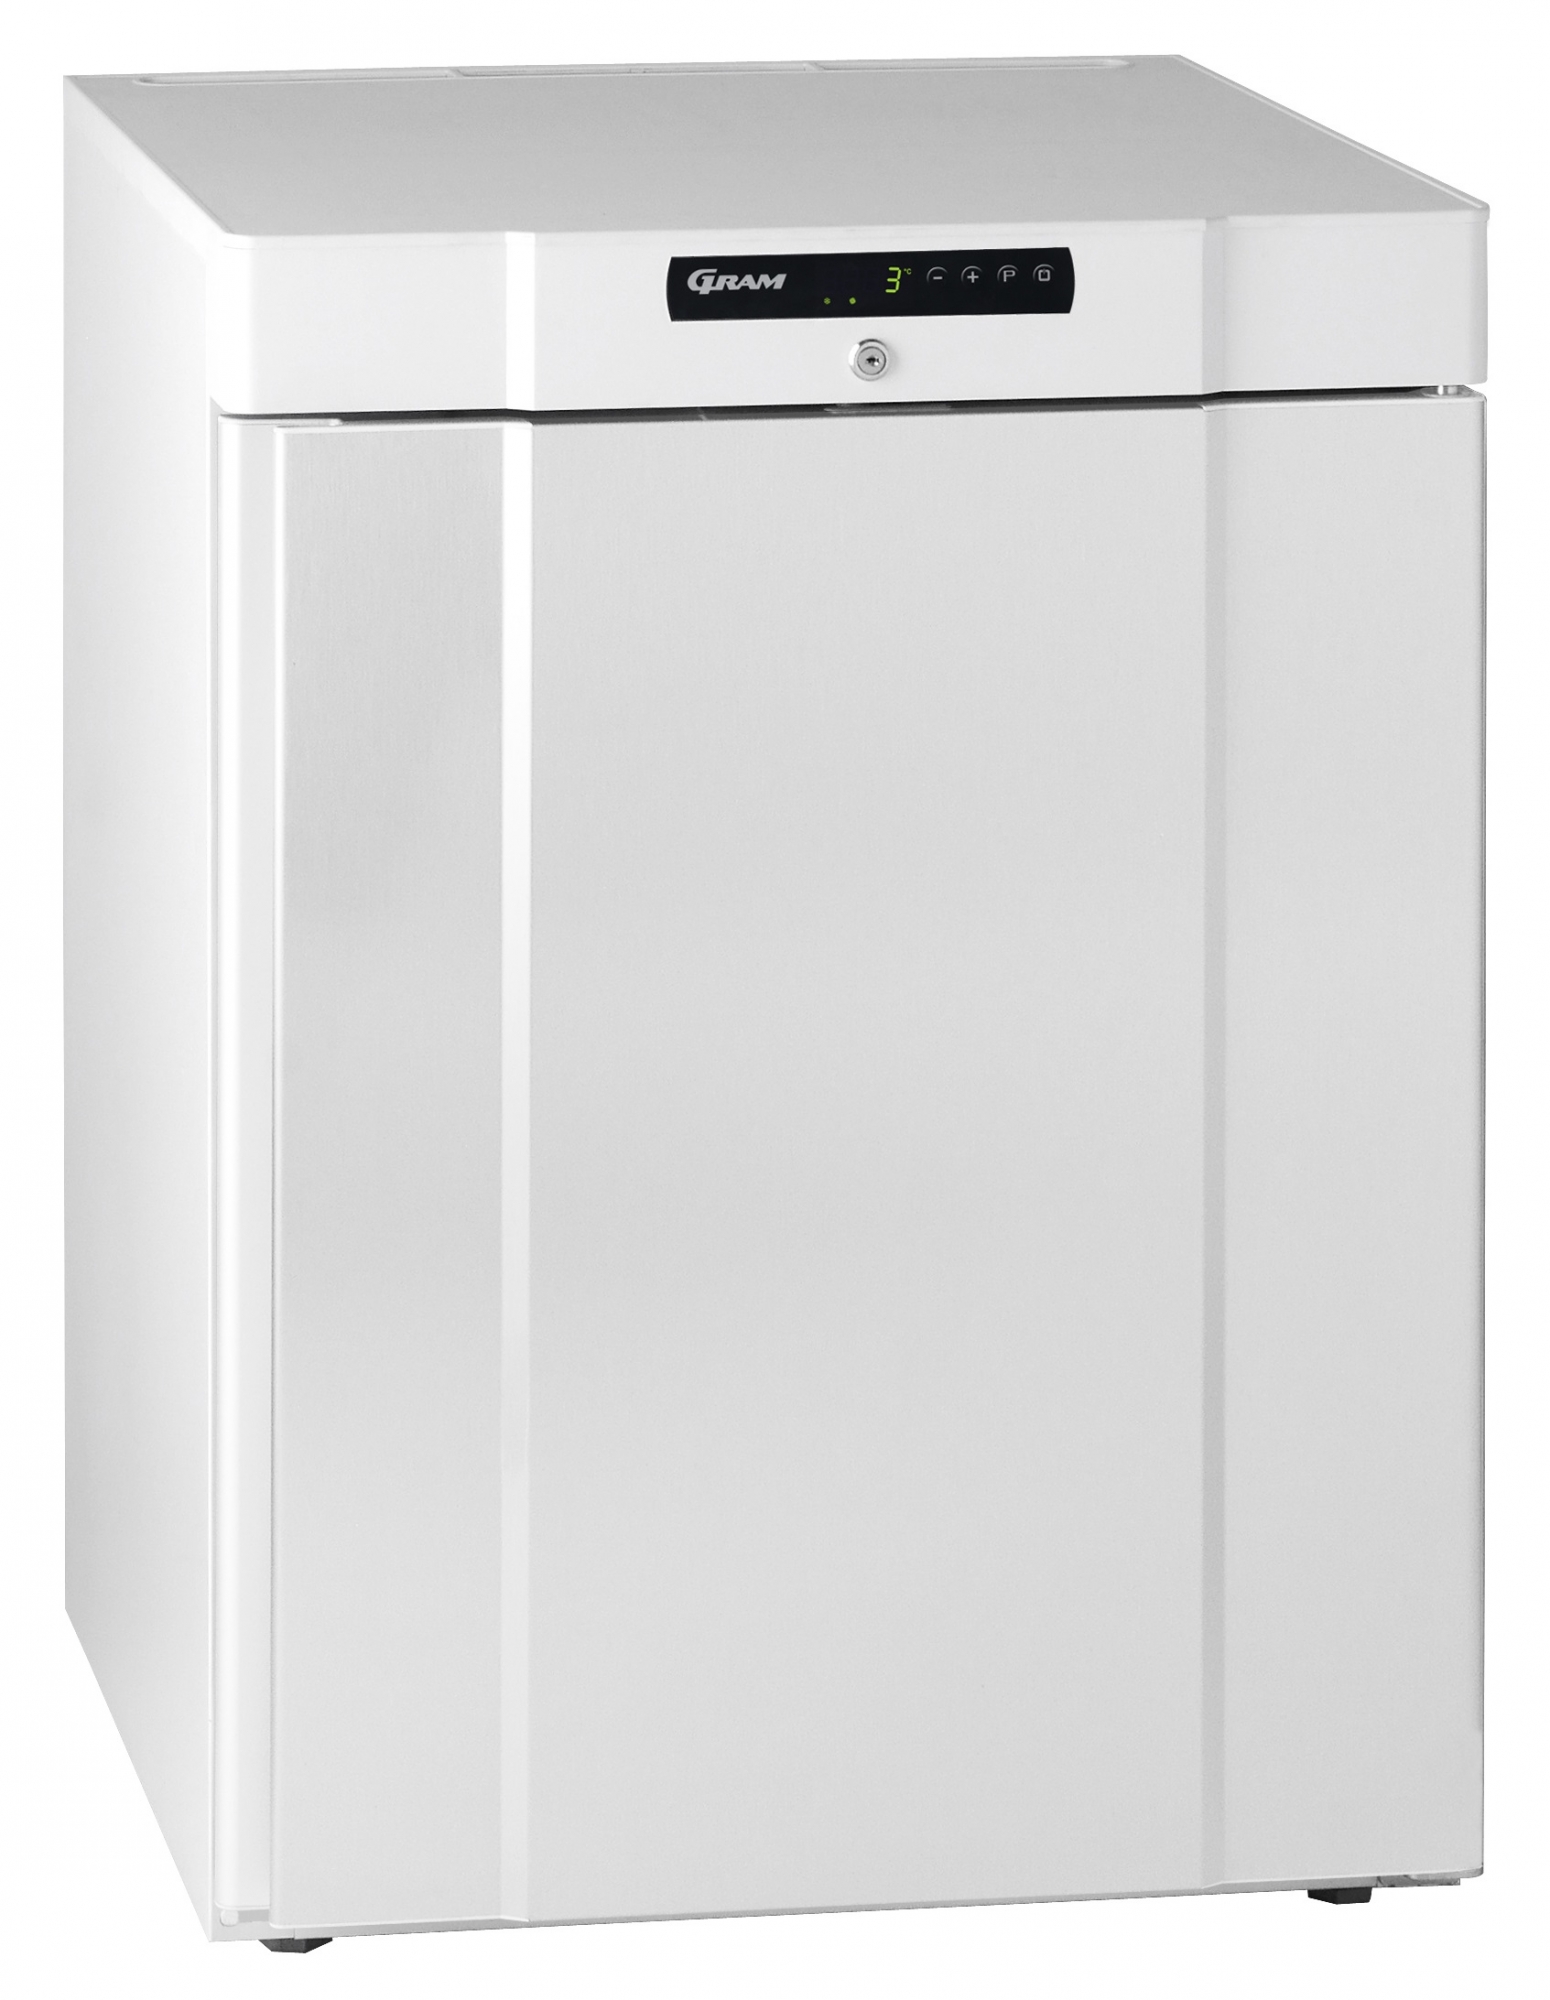 Gram Compact K 220 LG professionele tafelmodel koelkast